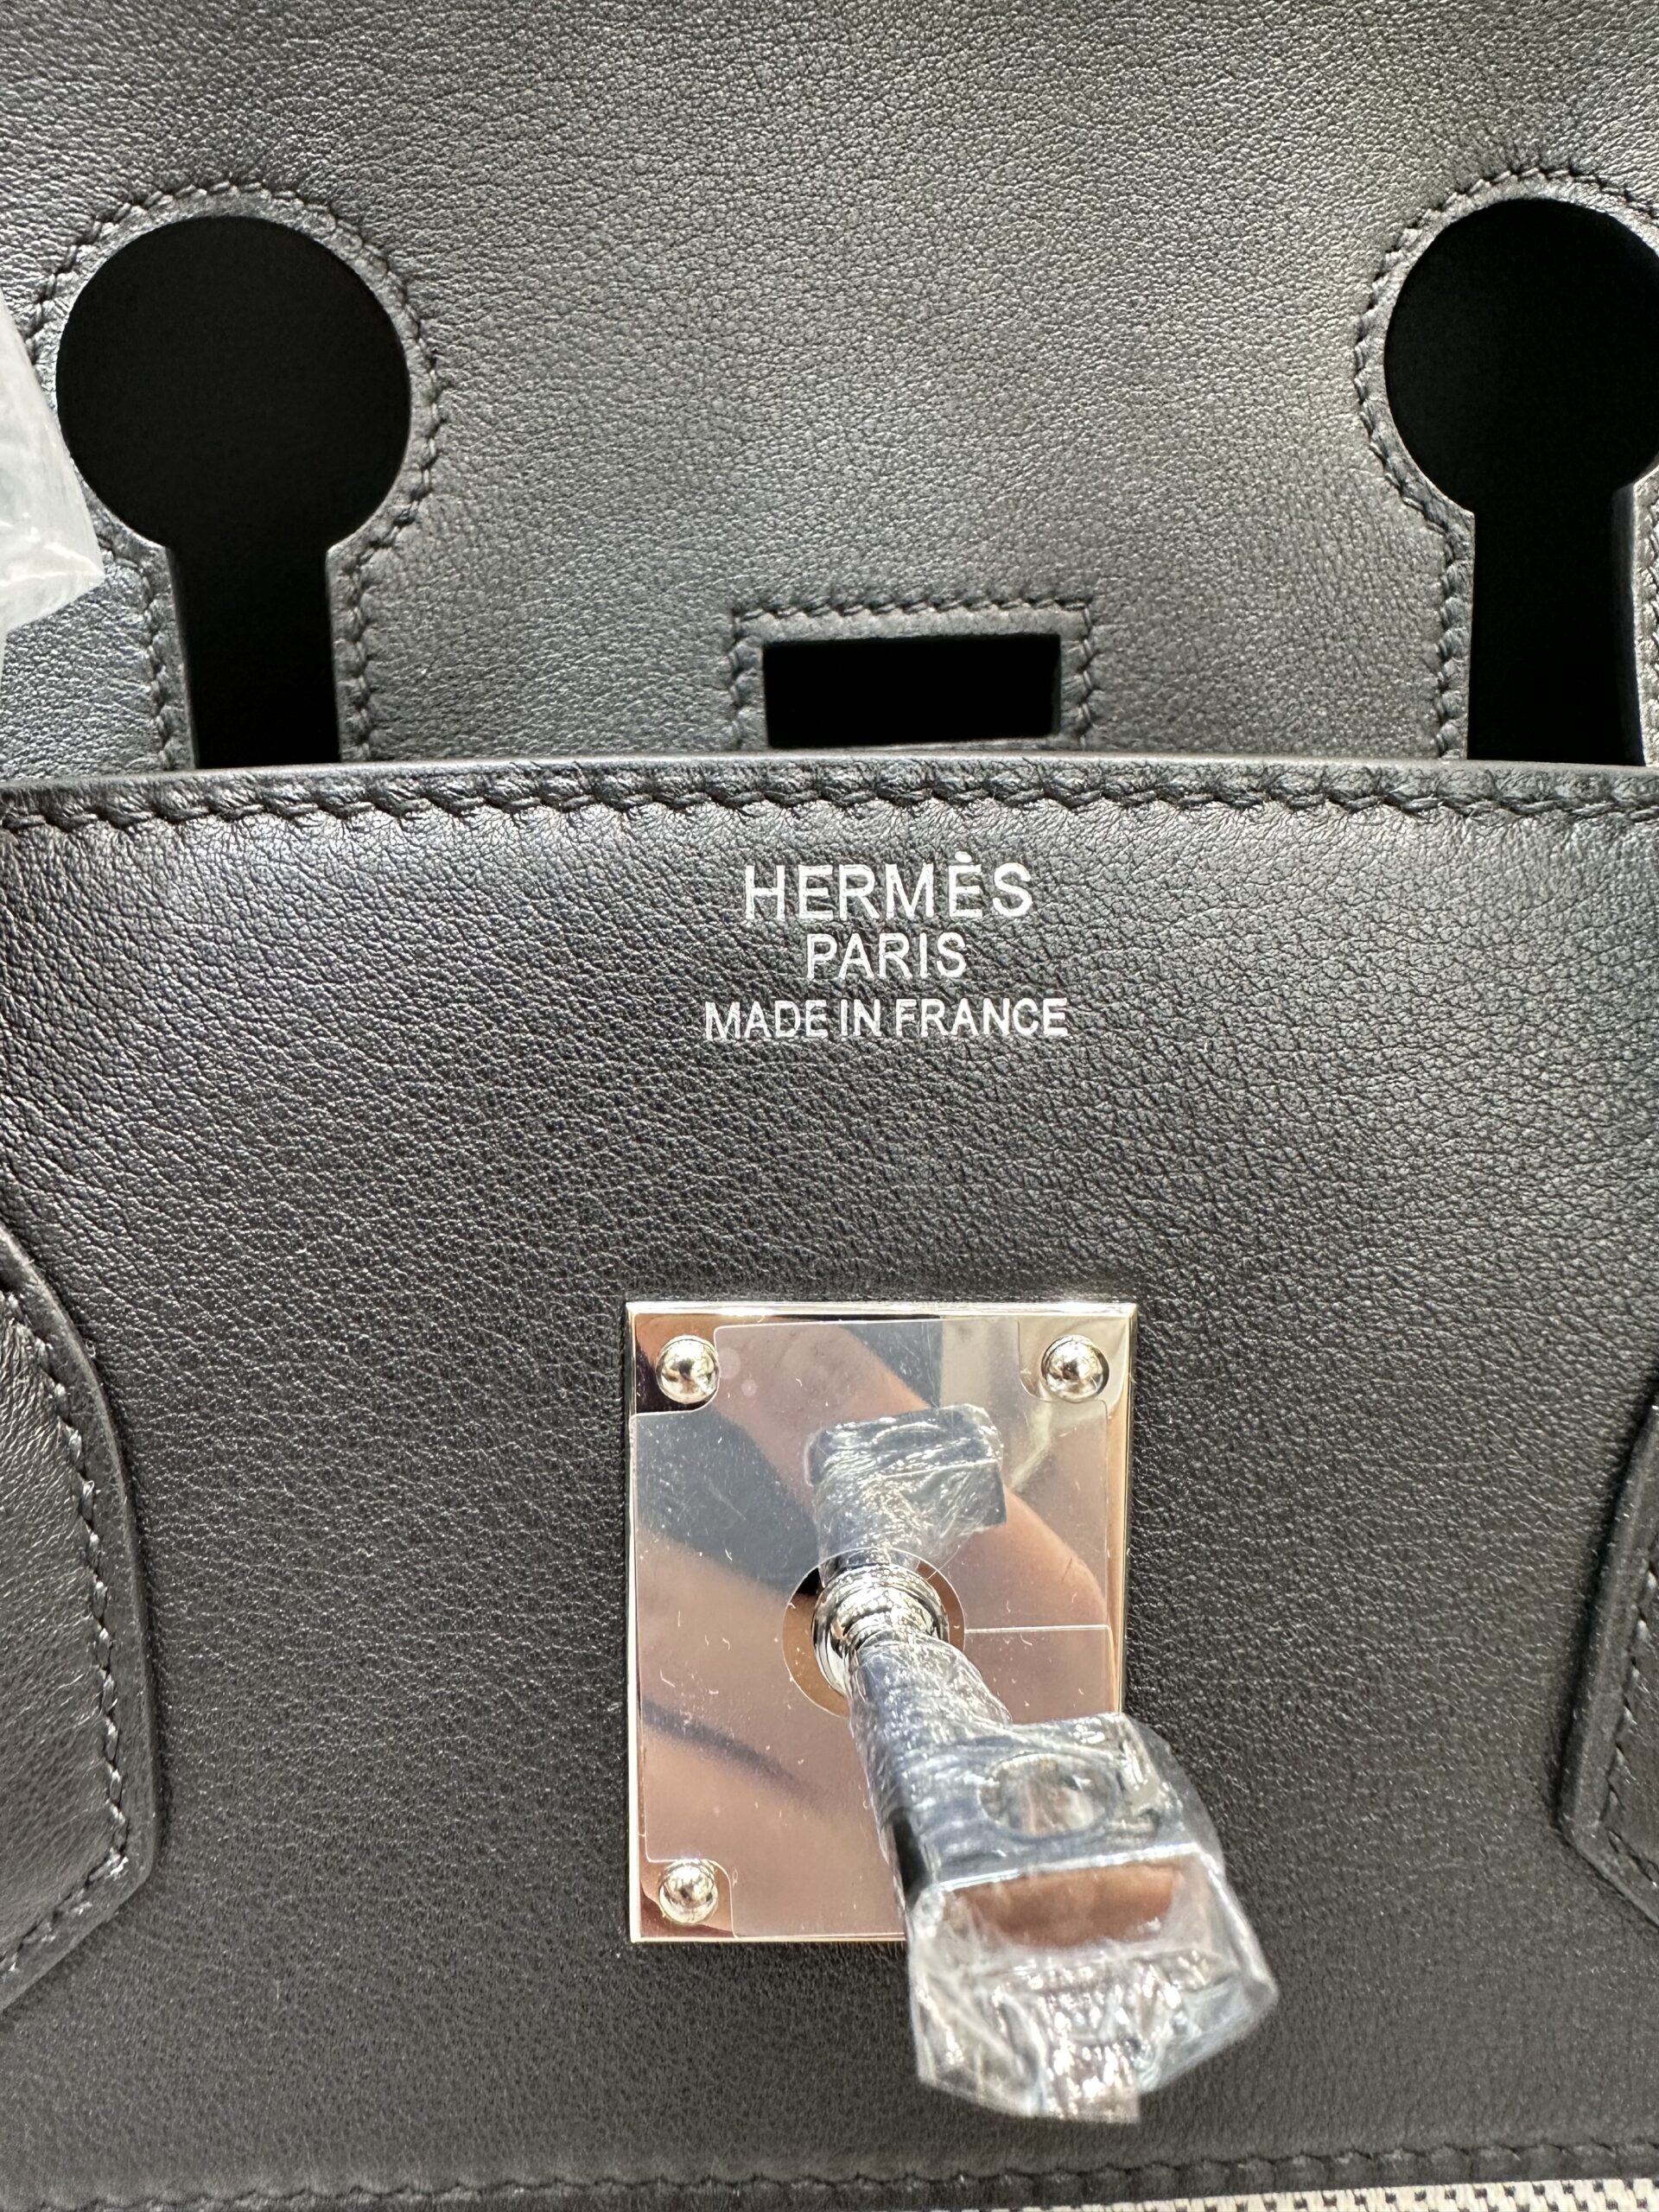 Hermes Birkin Hac 40 Gold Evercolor / Ficelle Toile Bag Palladium Hard –  Mightychic